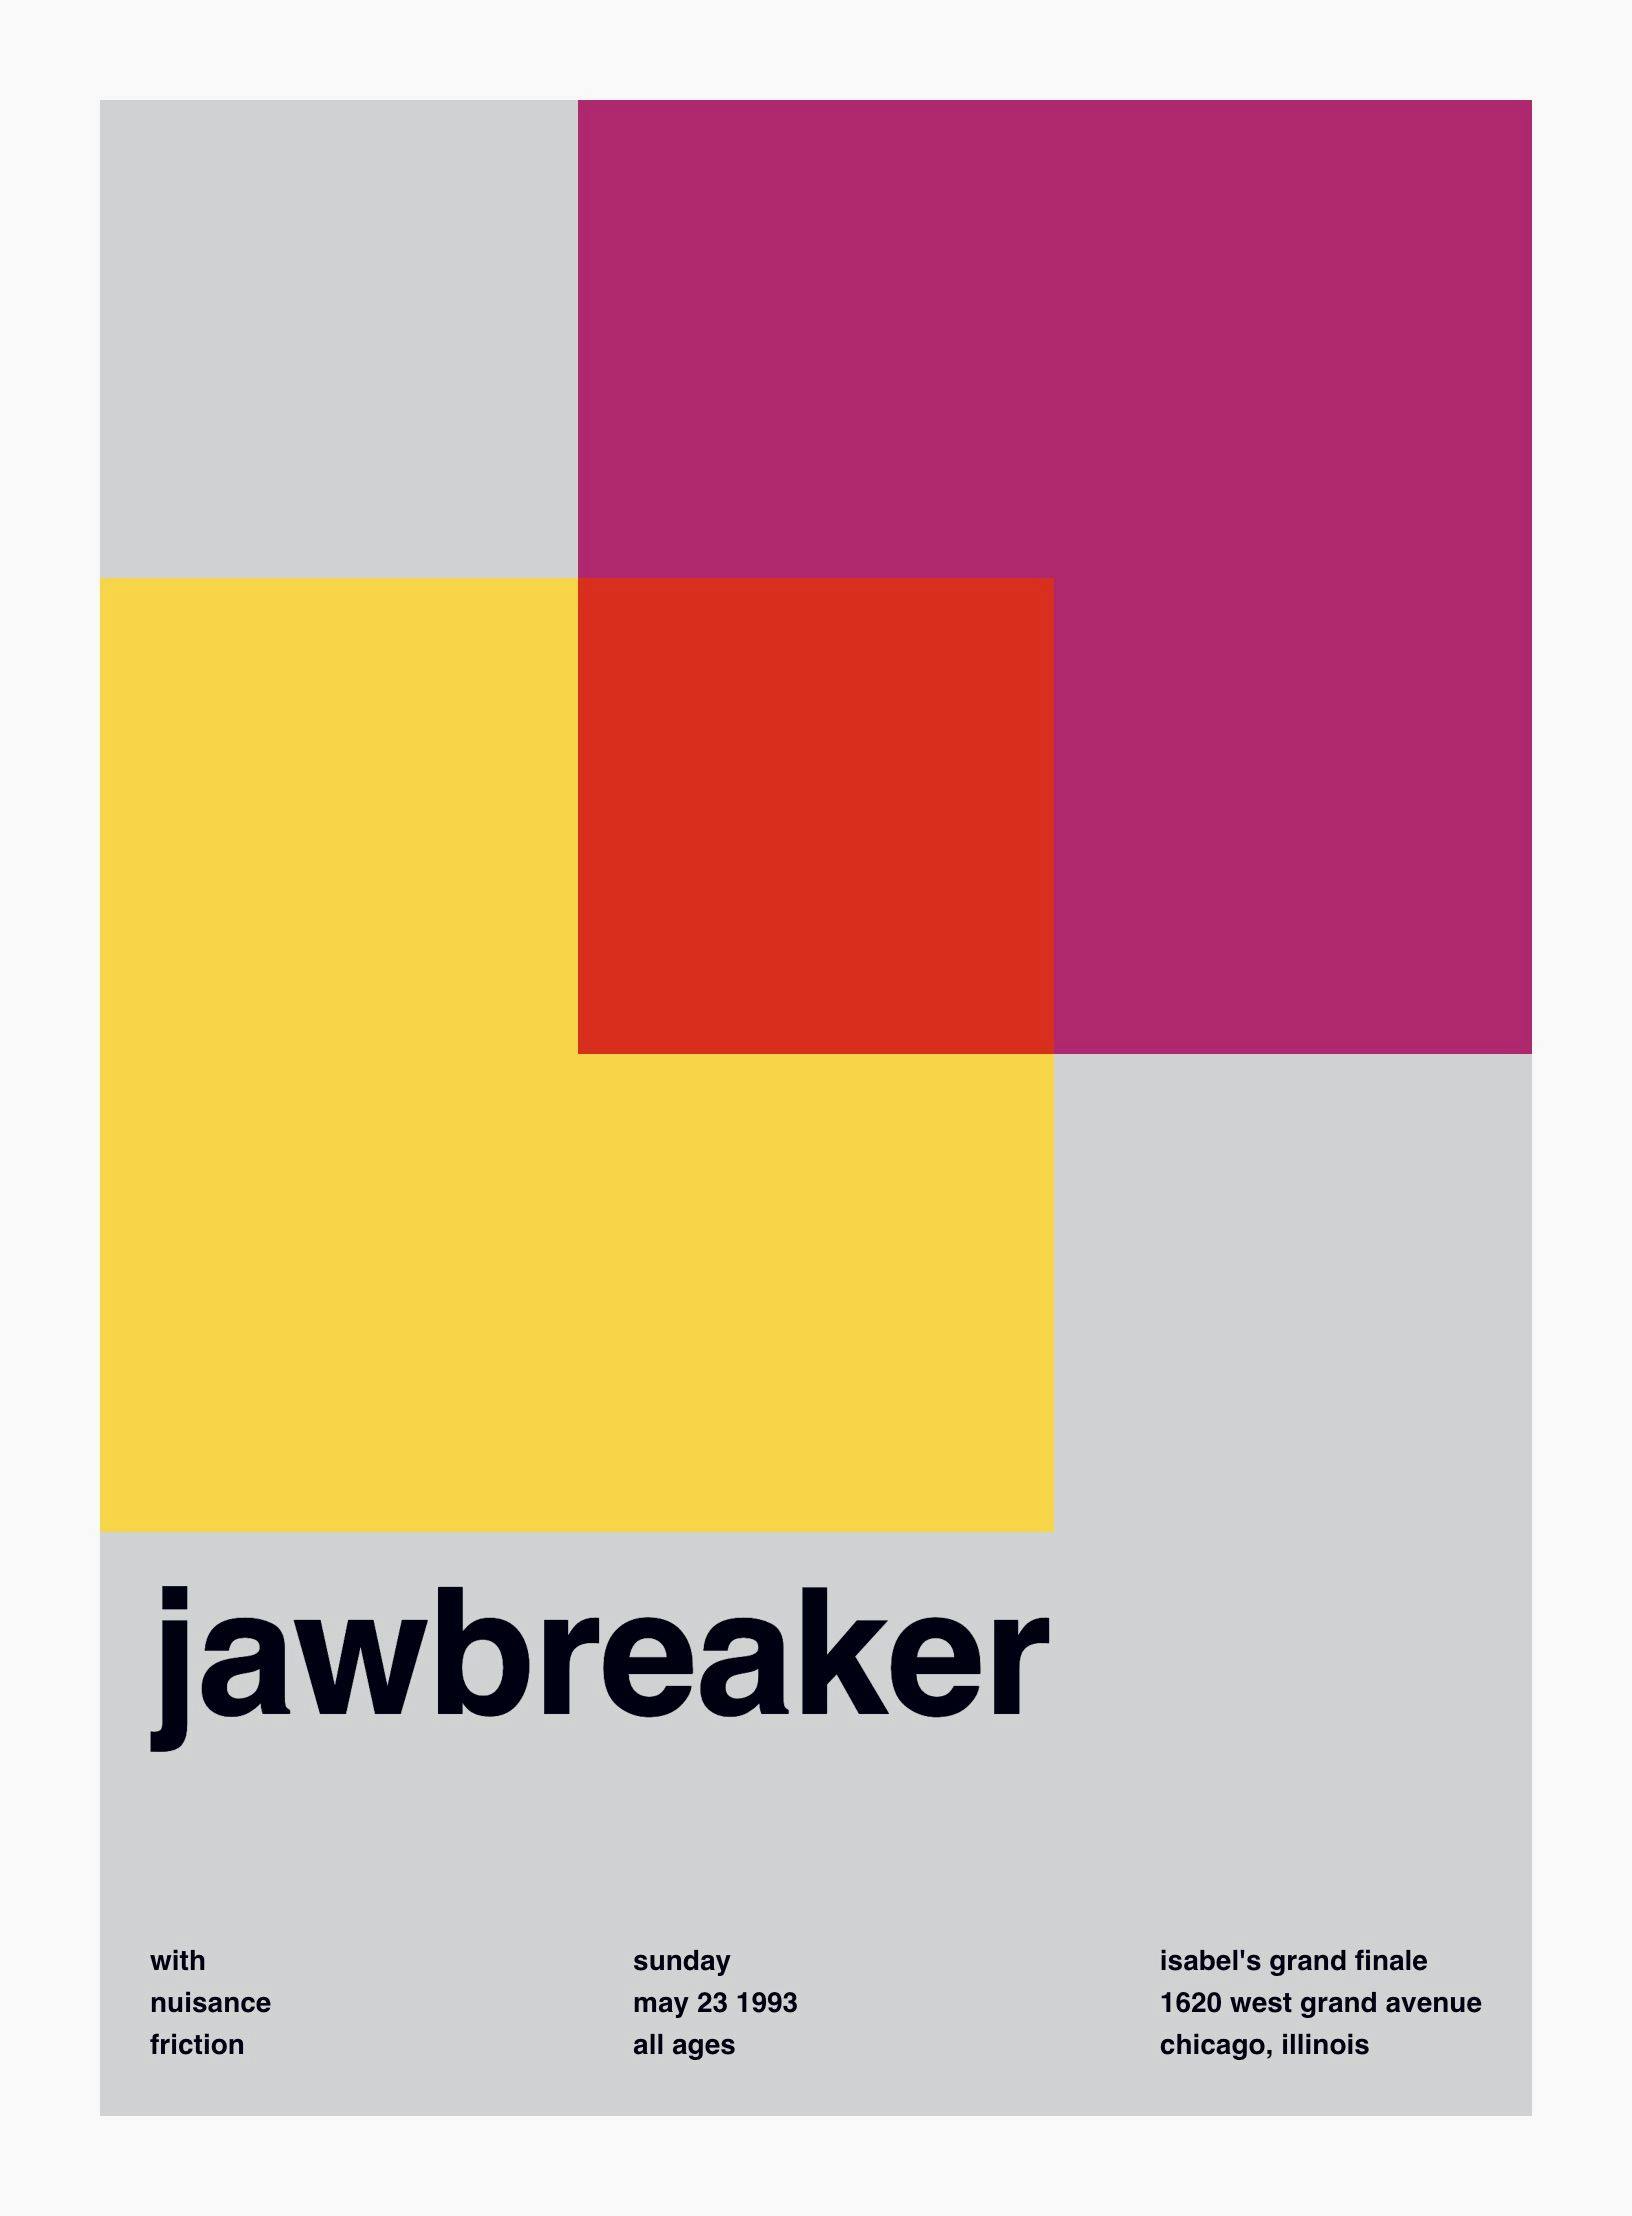 swissted - jawbreaker